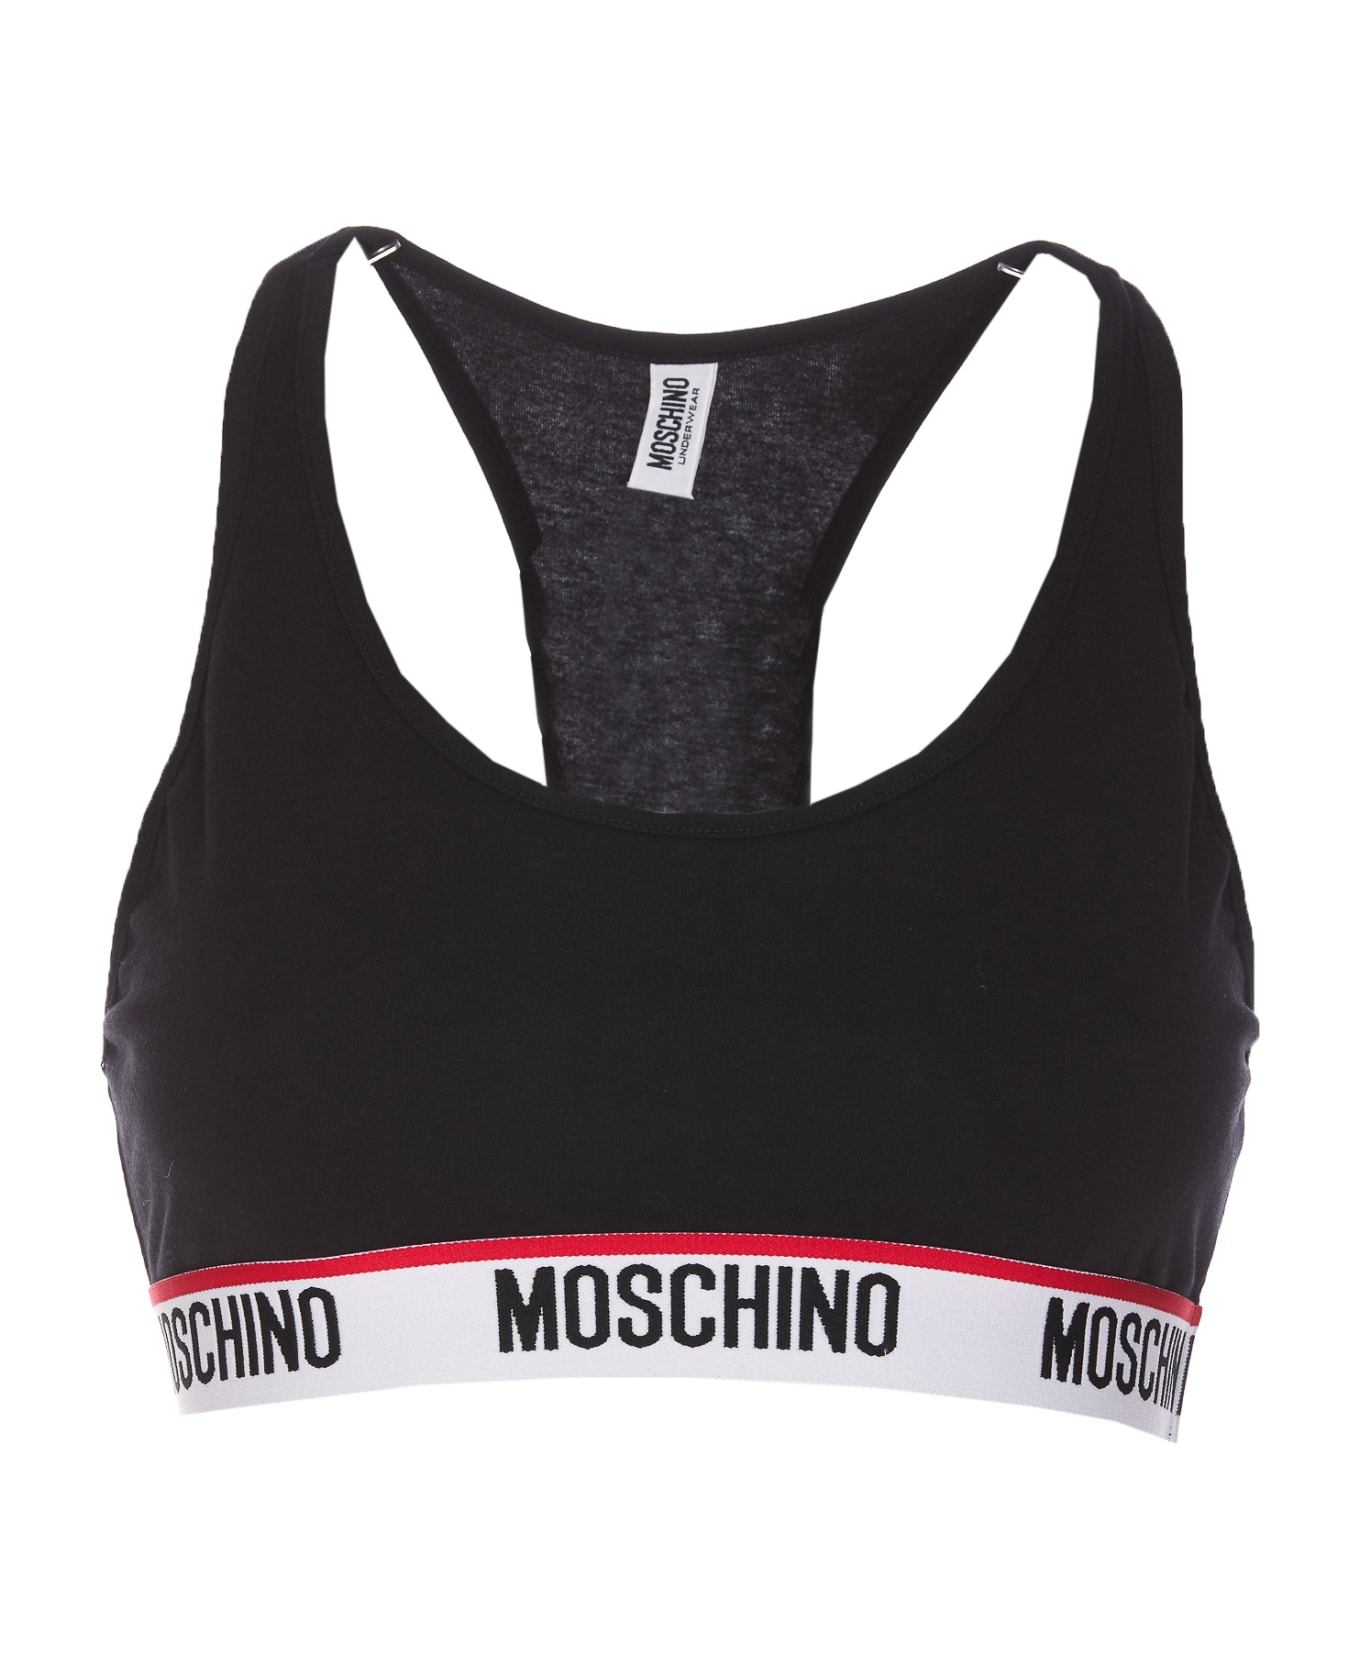 Moschino Band Logo Top - Black